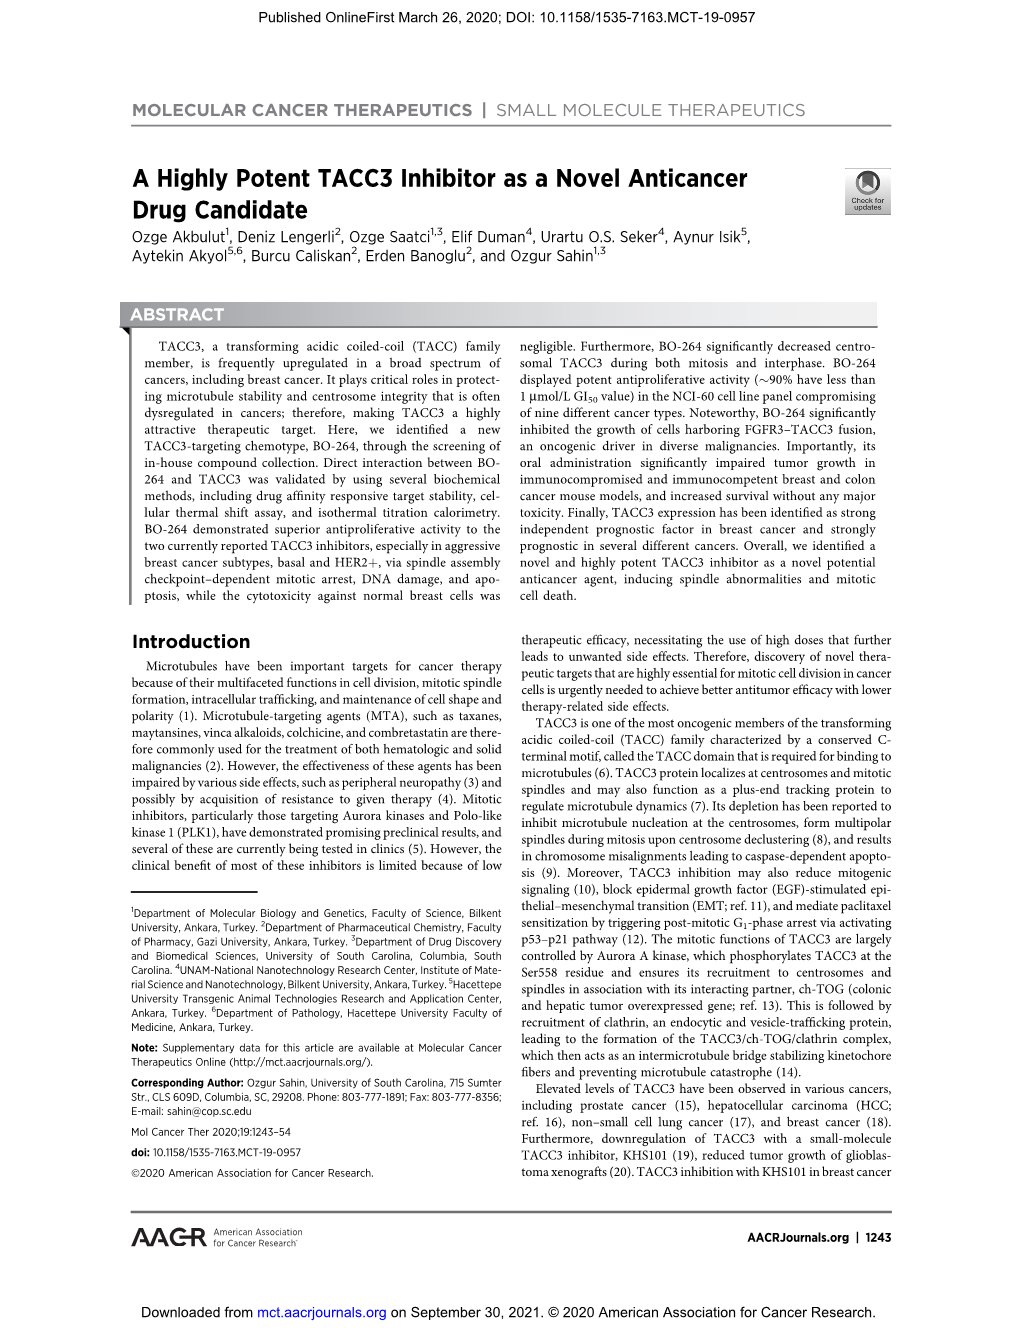 A Highly Potent TACC3 Inhibitor As a Novel Anticancer Drug Candidate Ozge Akbulut1, Deniz Lengerli2, Ozge Saatci1,3, Elif Duman4, Urartu O.S